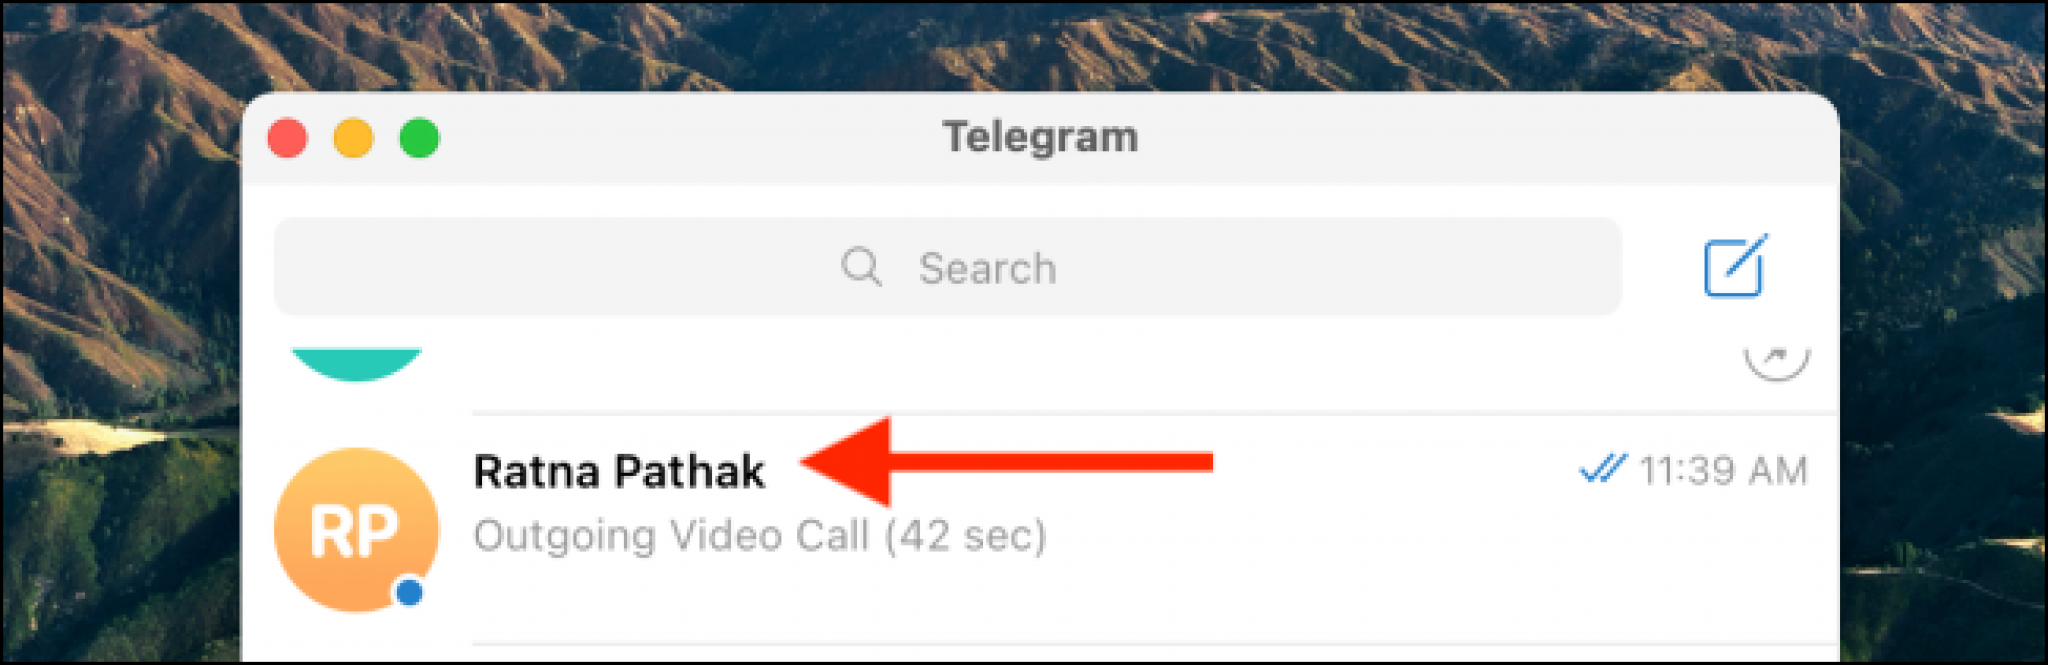 Как включить видеозвонок в телеграмме на андроид фото 93